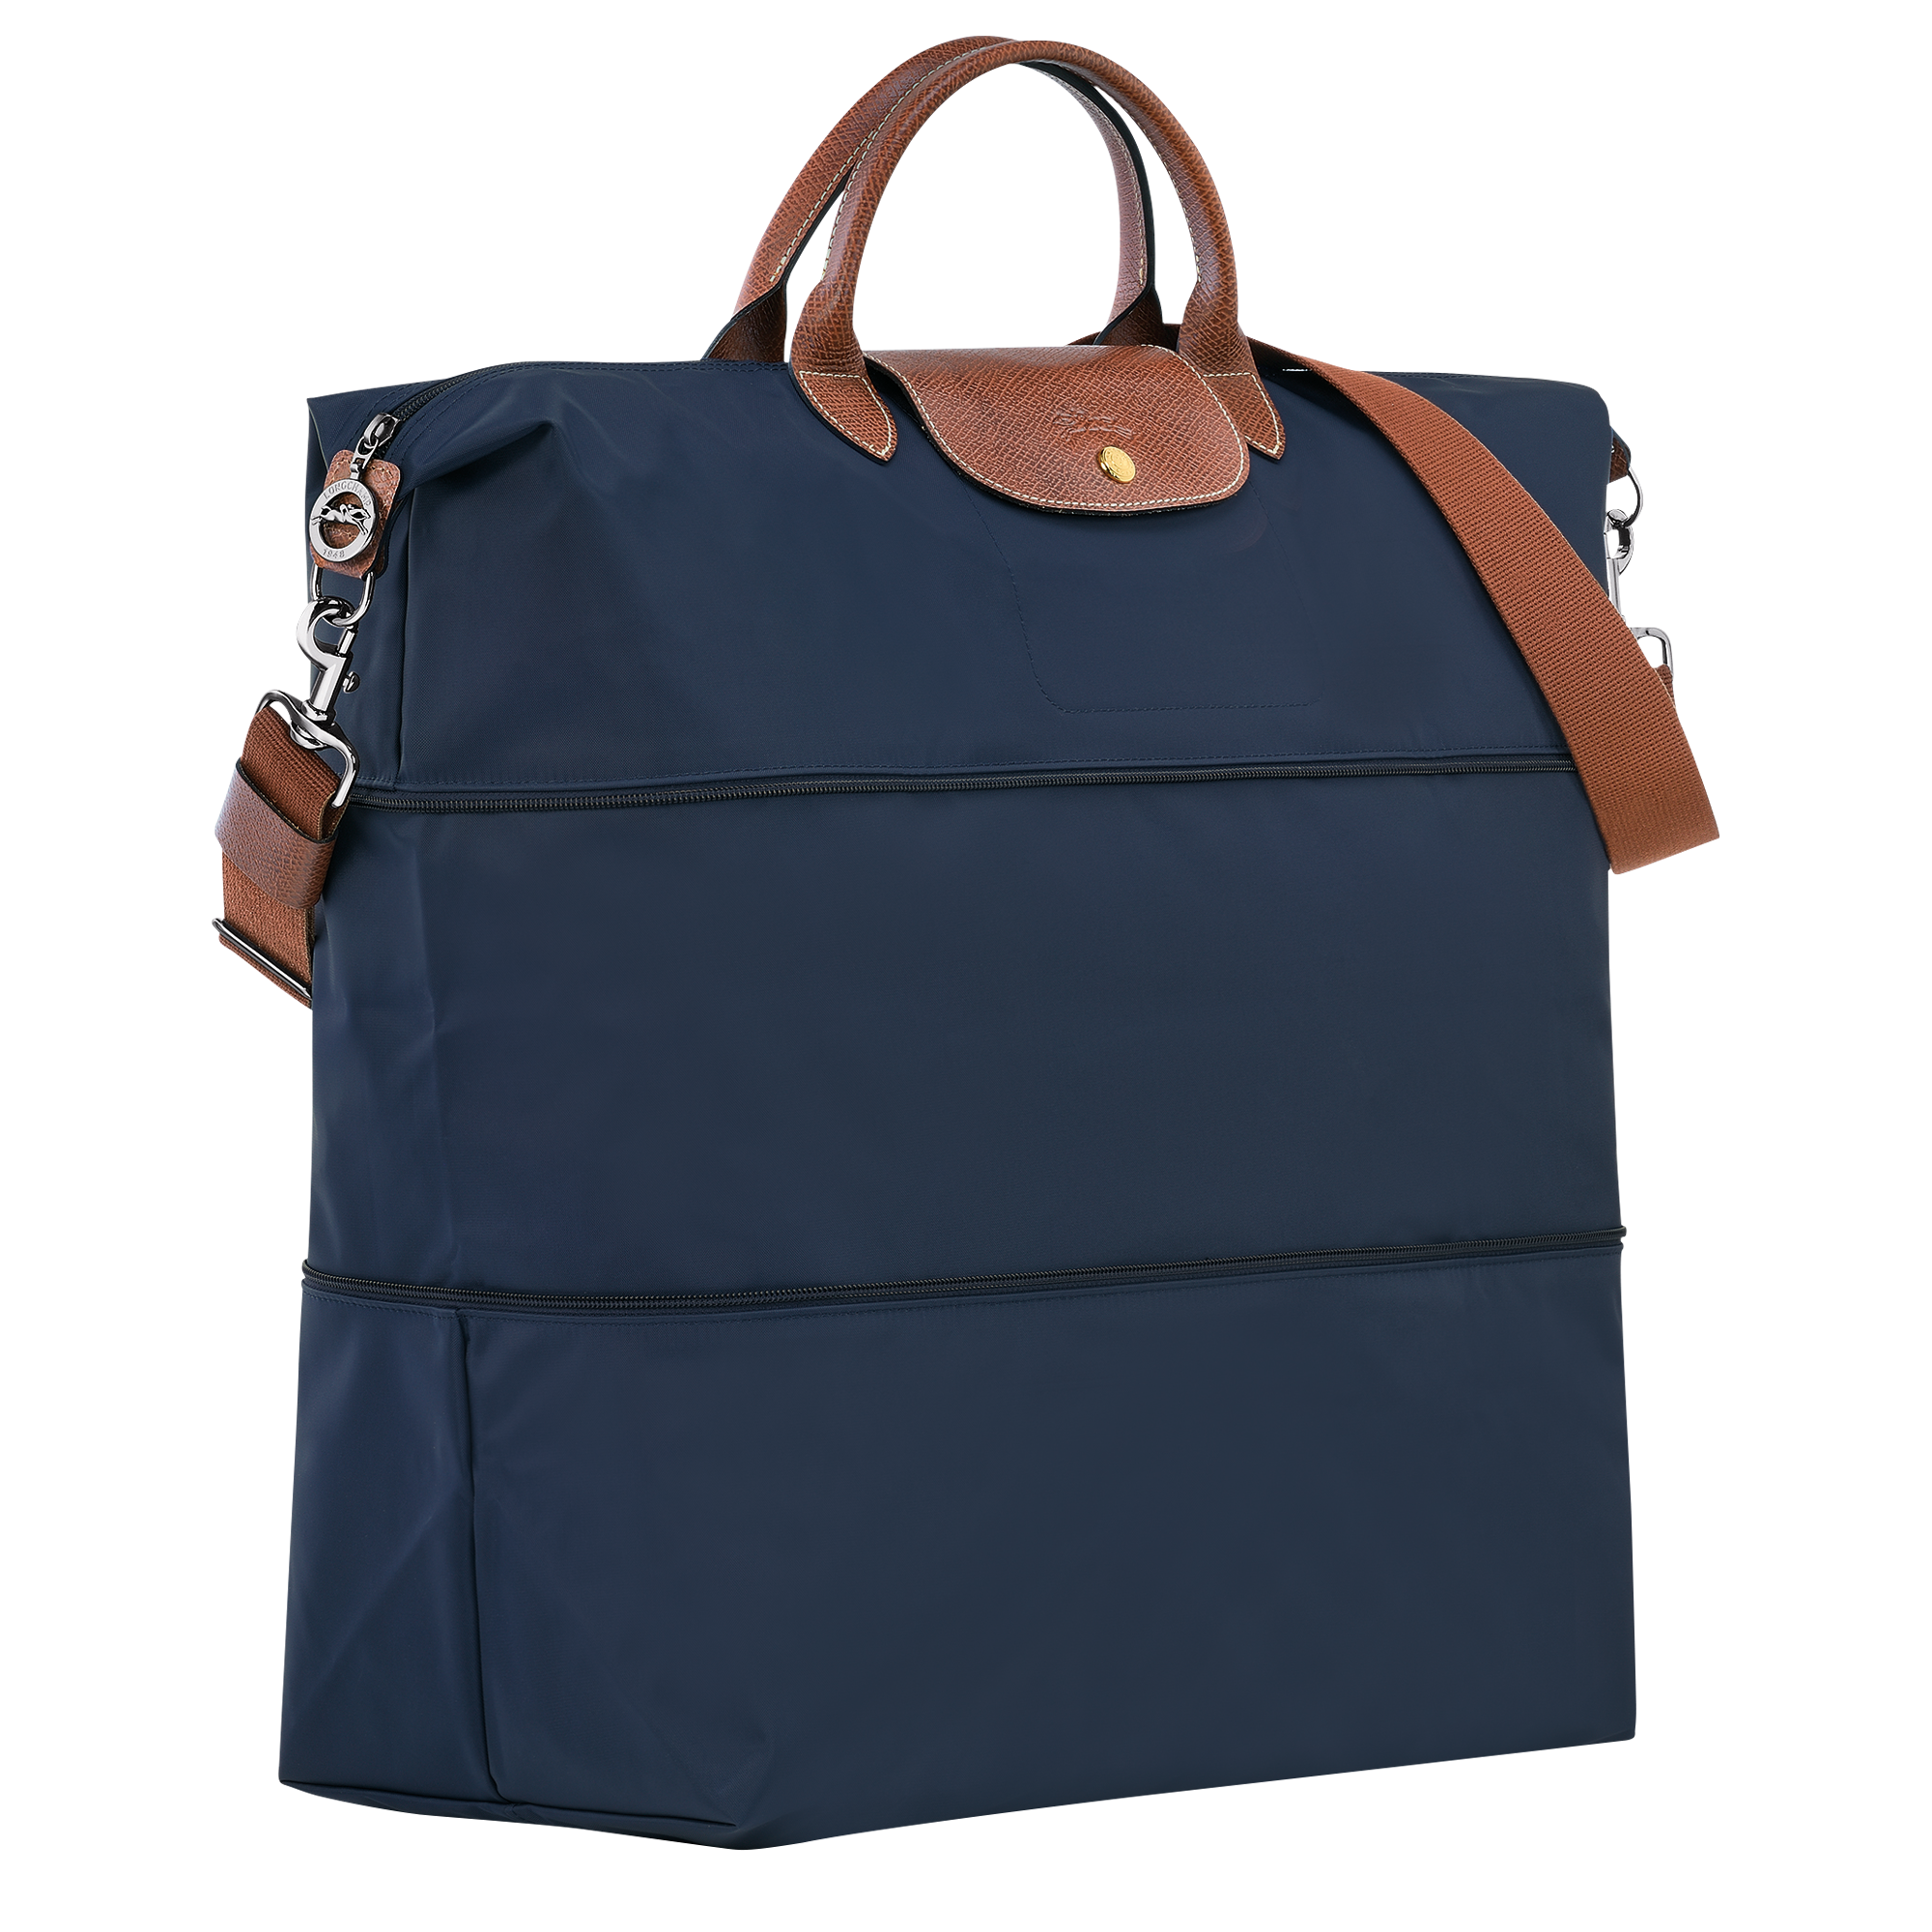 Le Pliage Original Travel bag expandable Navy - Recycled canvas